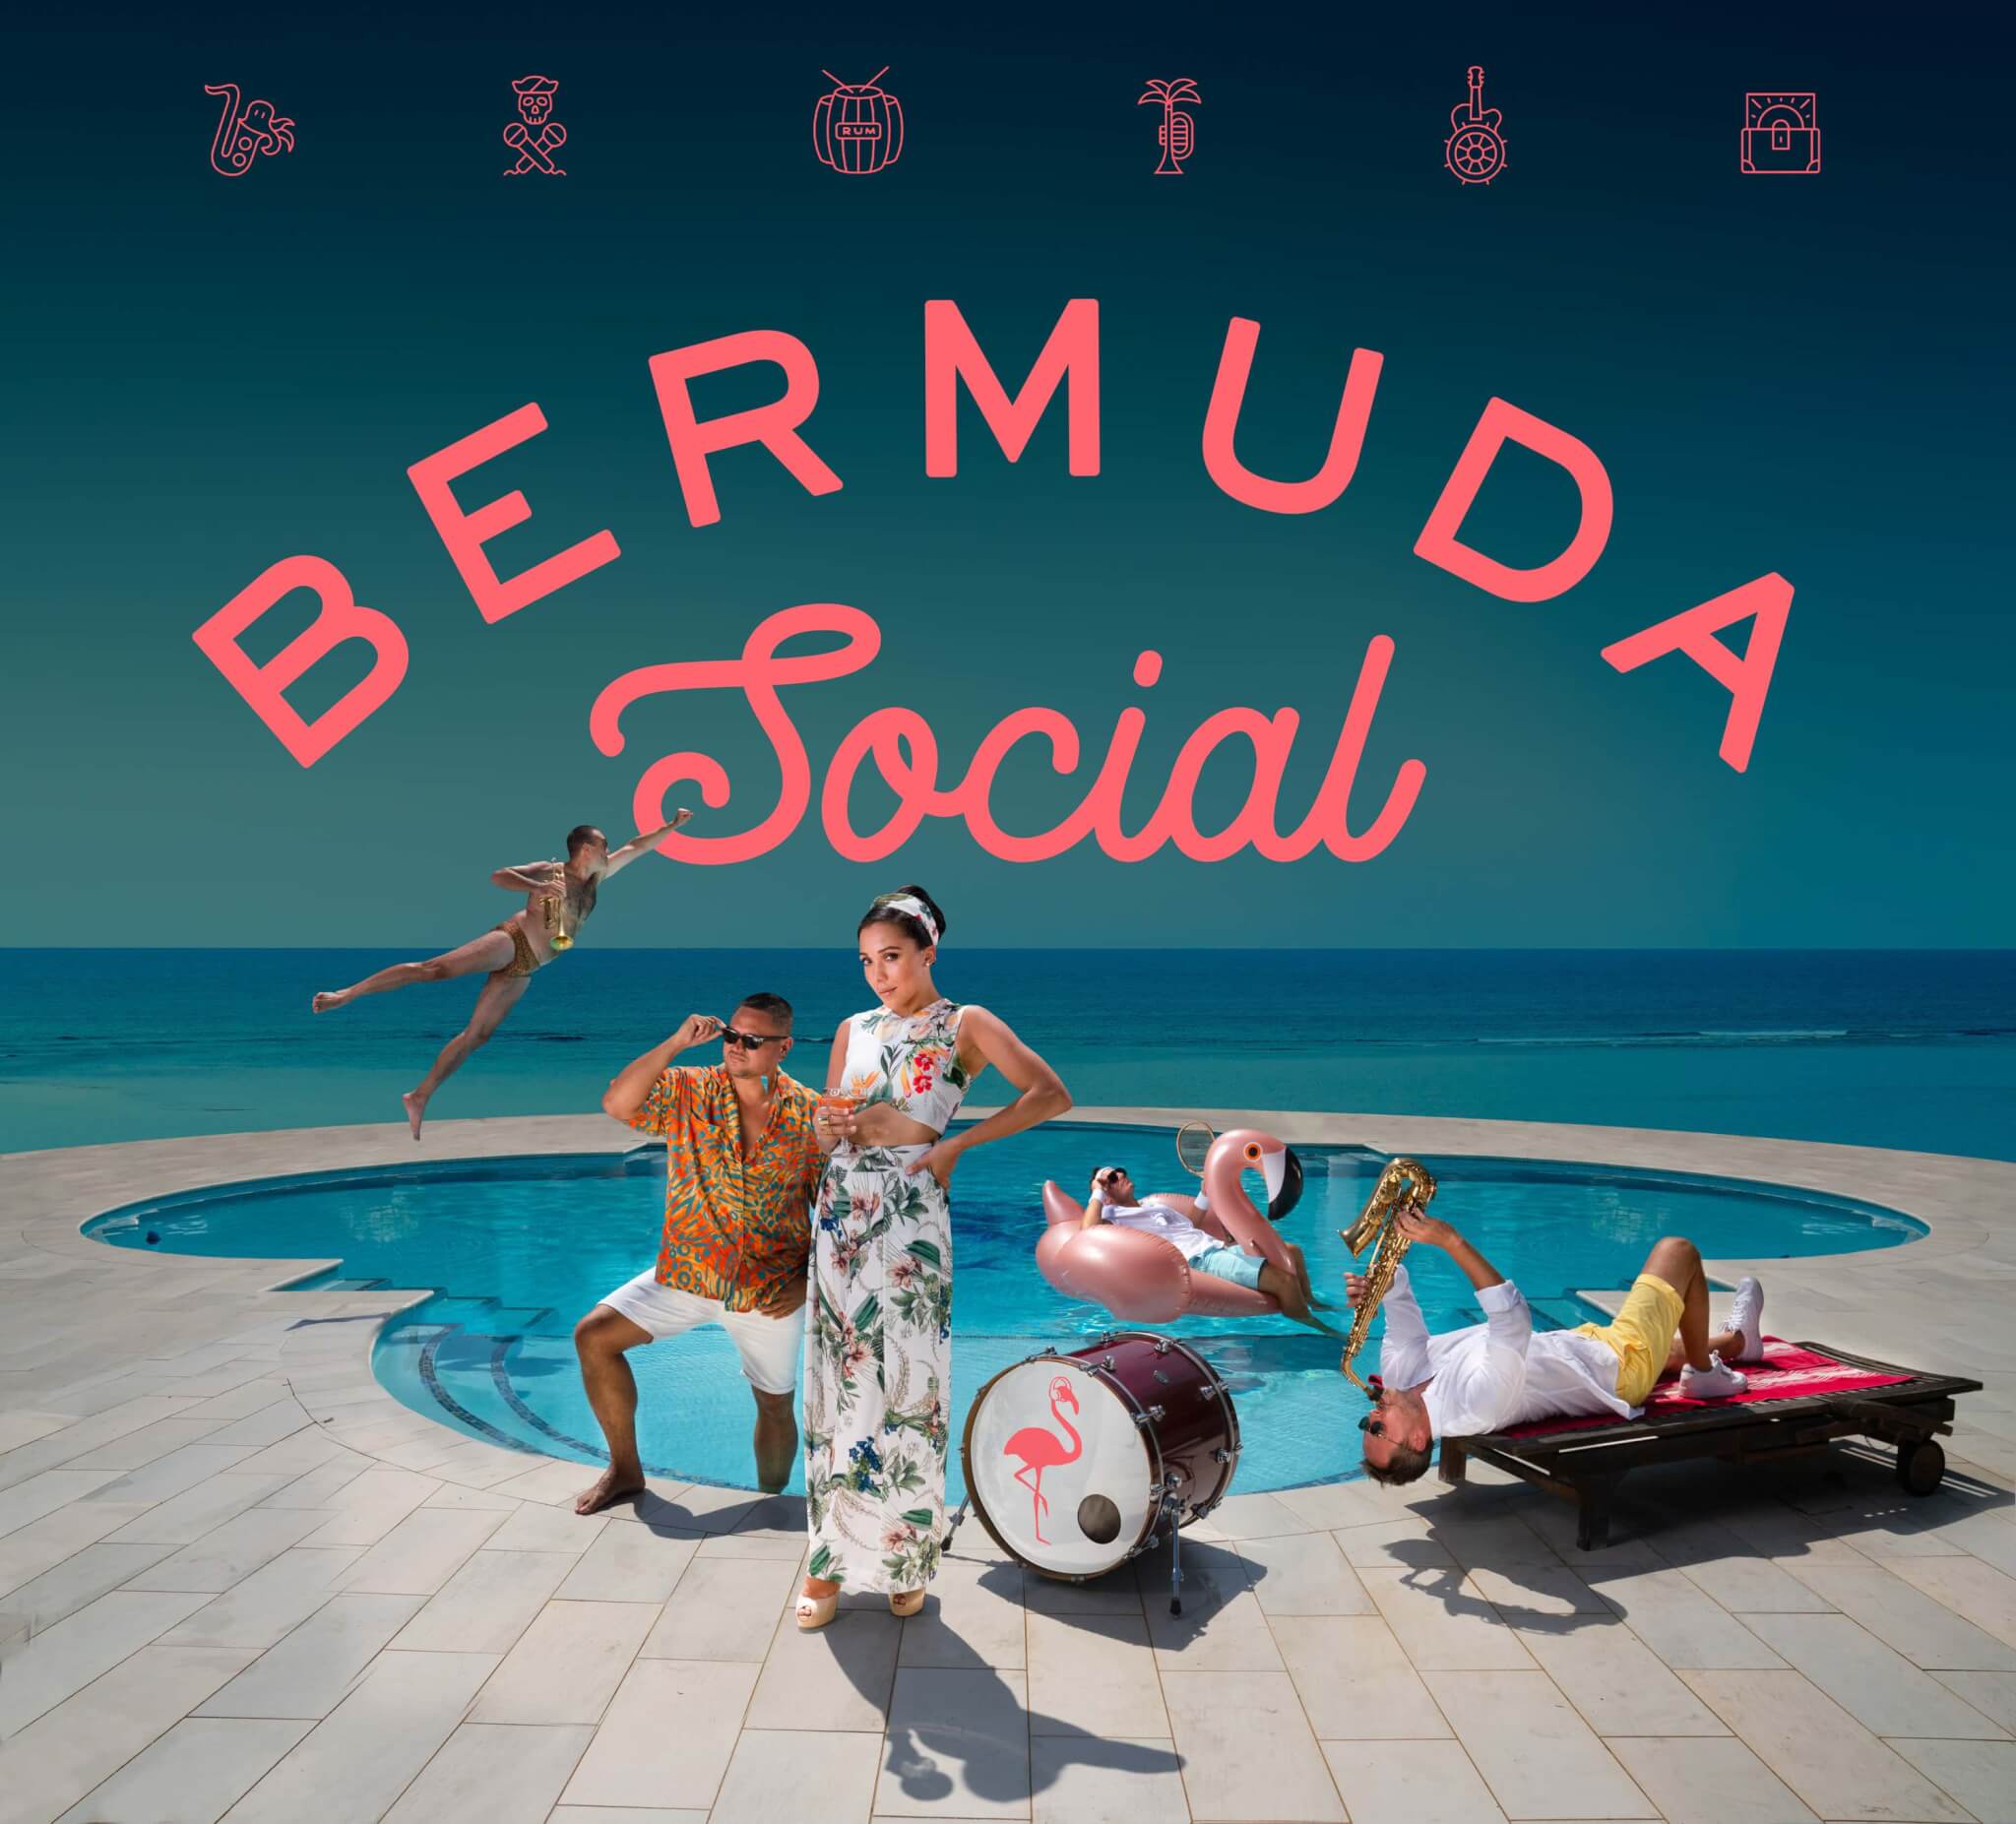 Bermuda Social Club